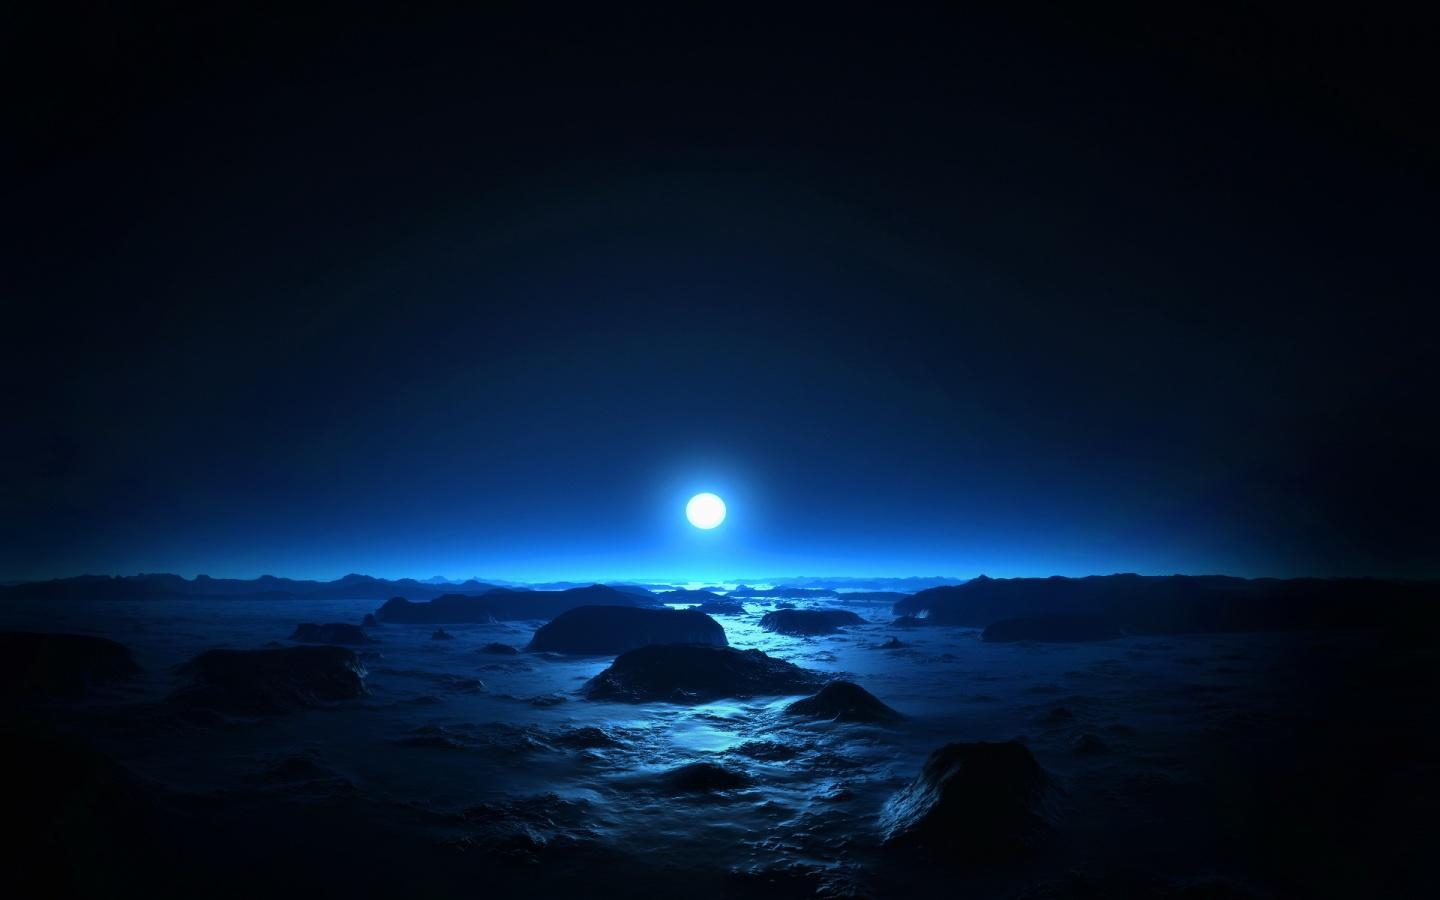 Download wallpaper: moon on horizon, night, light, download